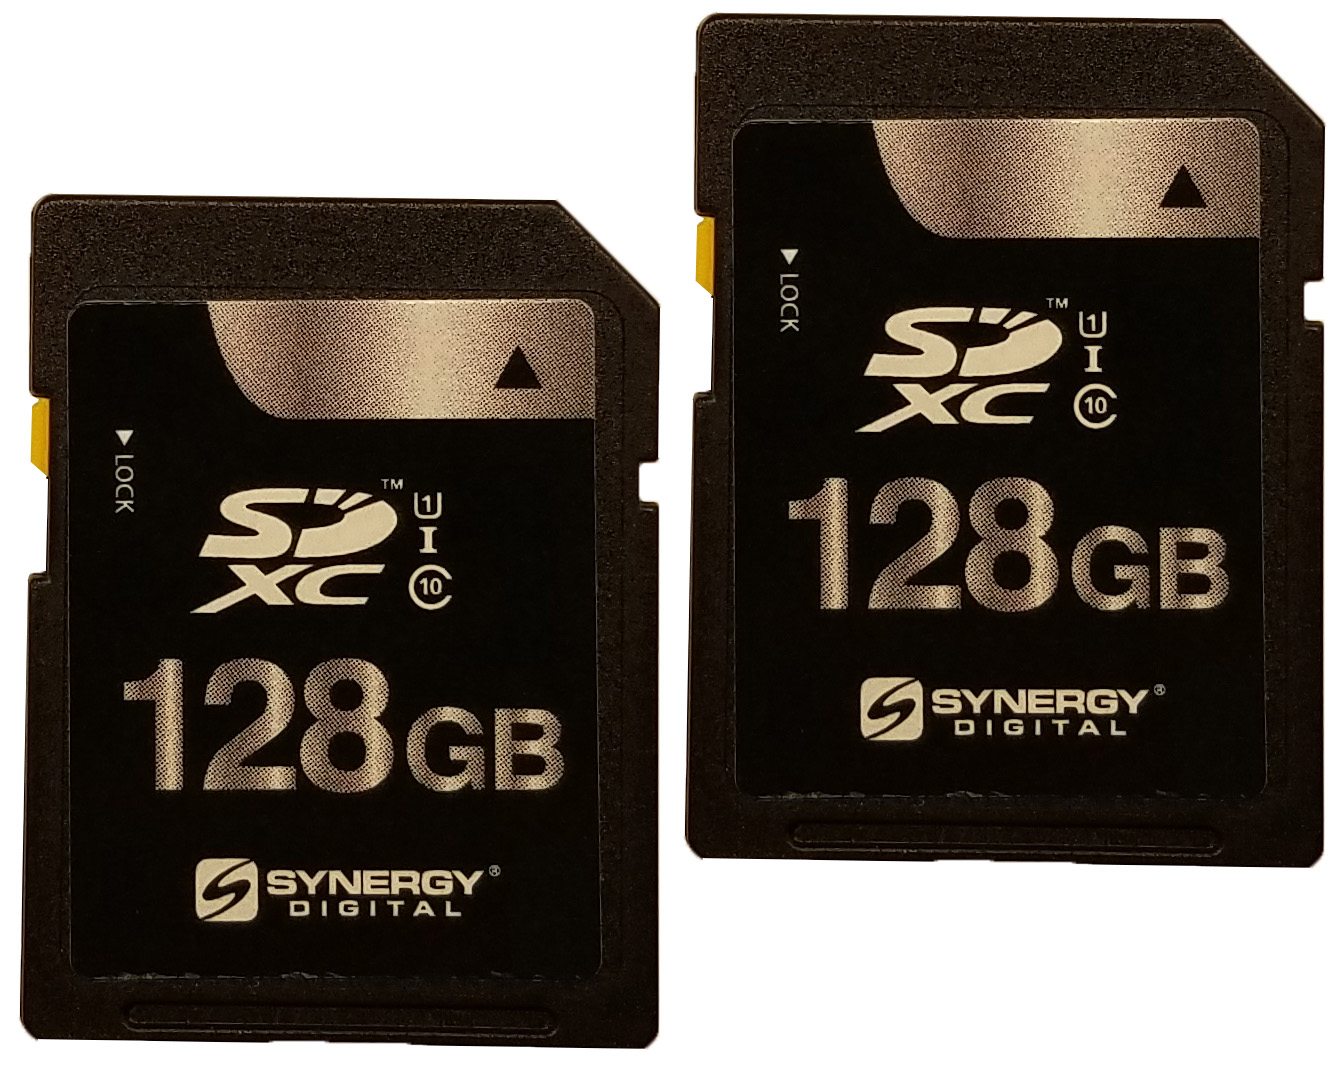 Memory Cards for FujifilmDigital Camera